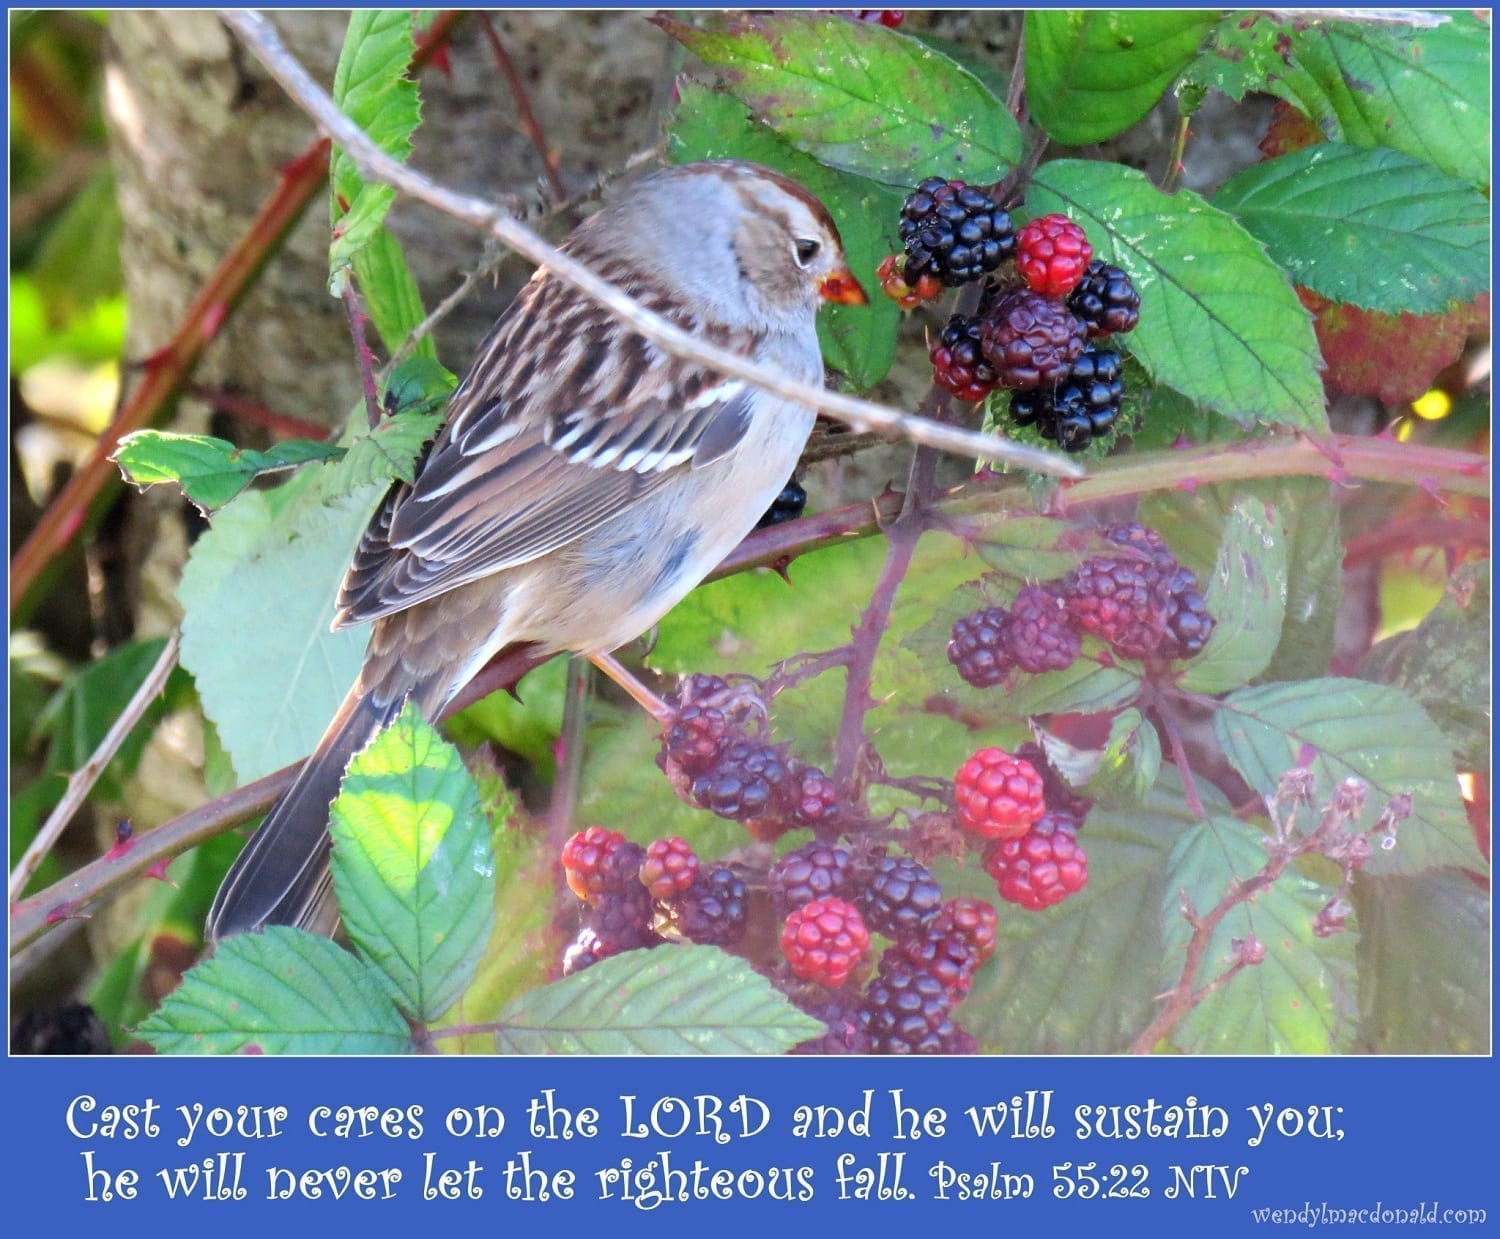 Song Sparrow on Blackberry vine, photo credit: Wendy McDonald